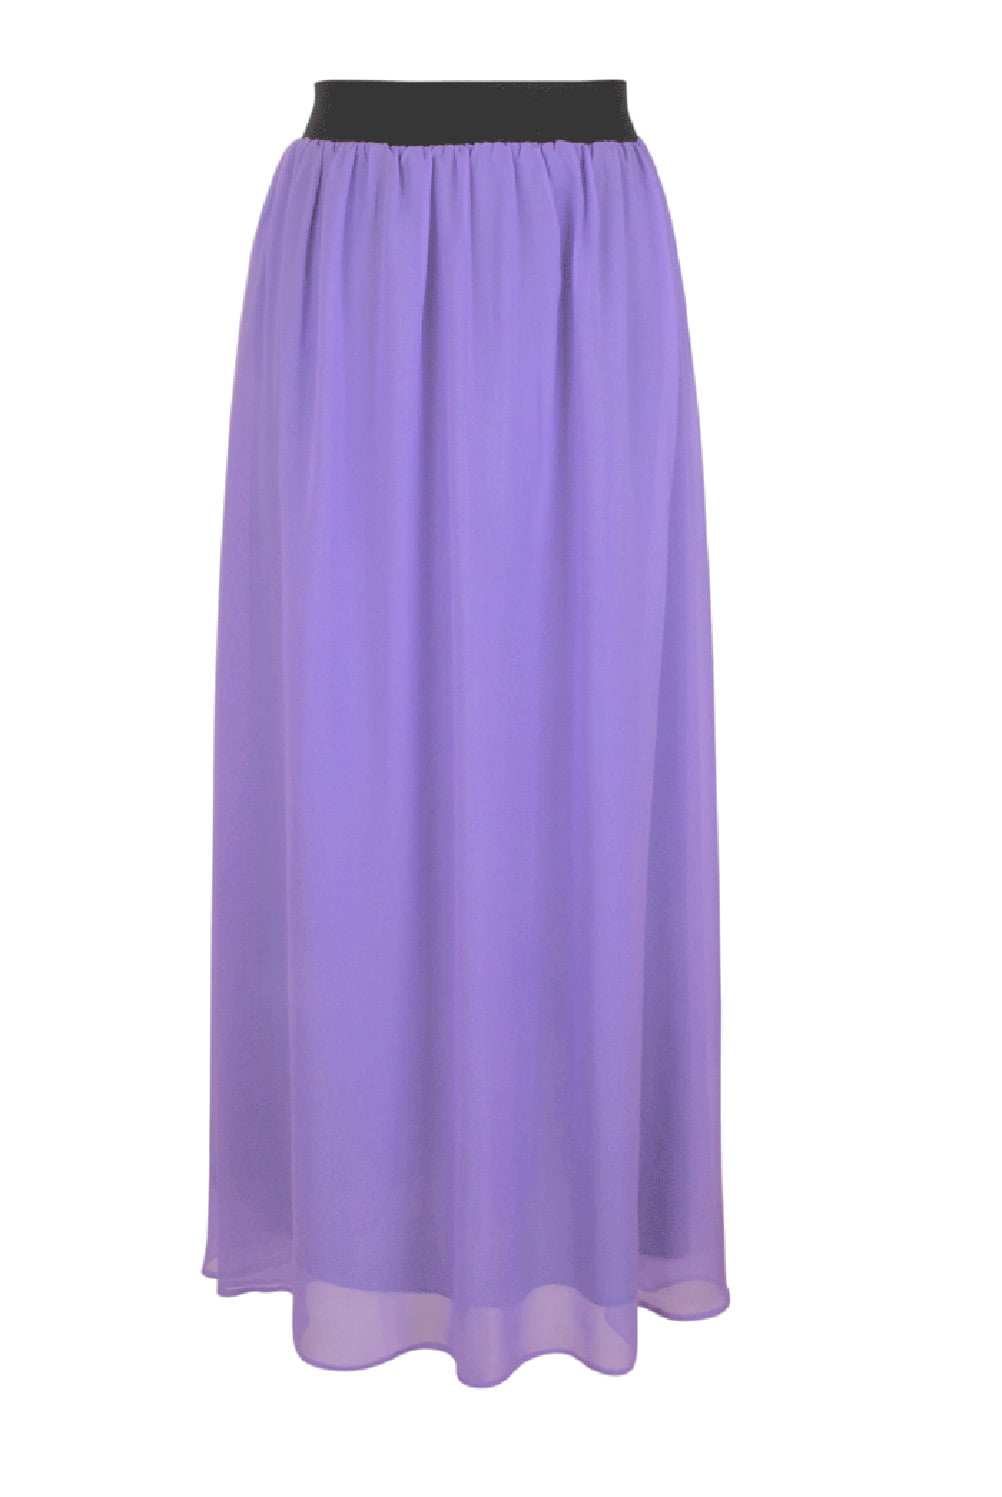 Faship Women Long Retro Pleated Maxi Skirt - Lavender,3X 